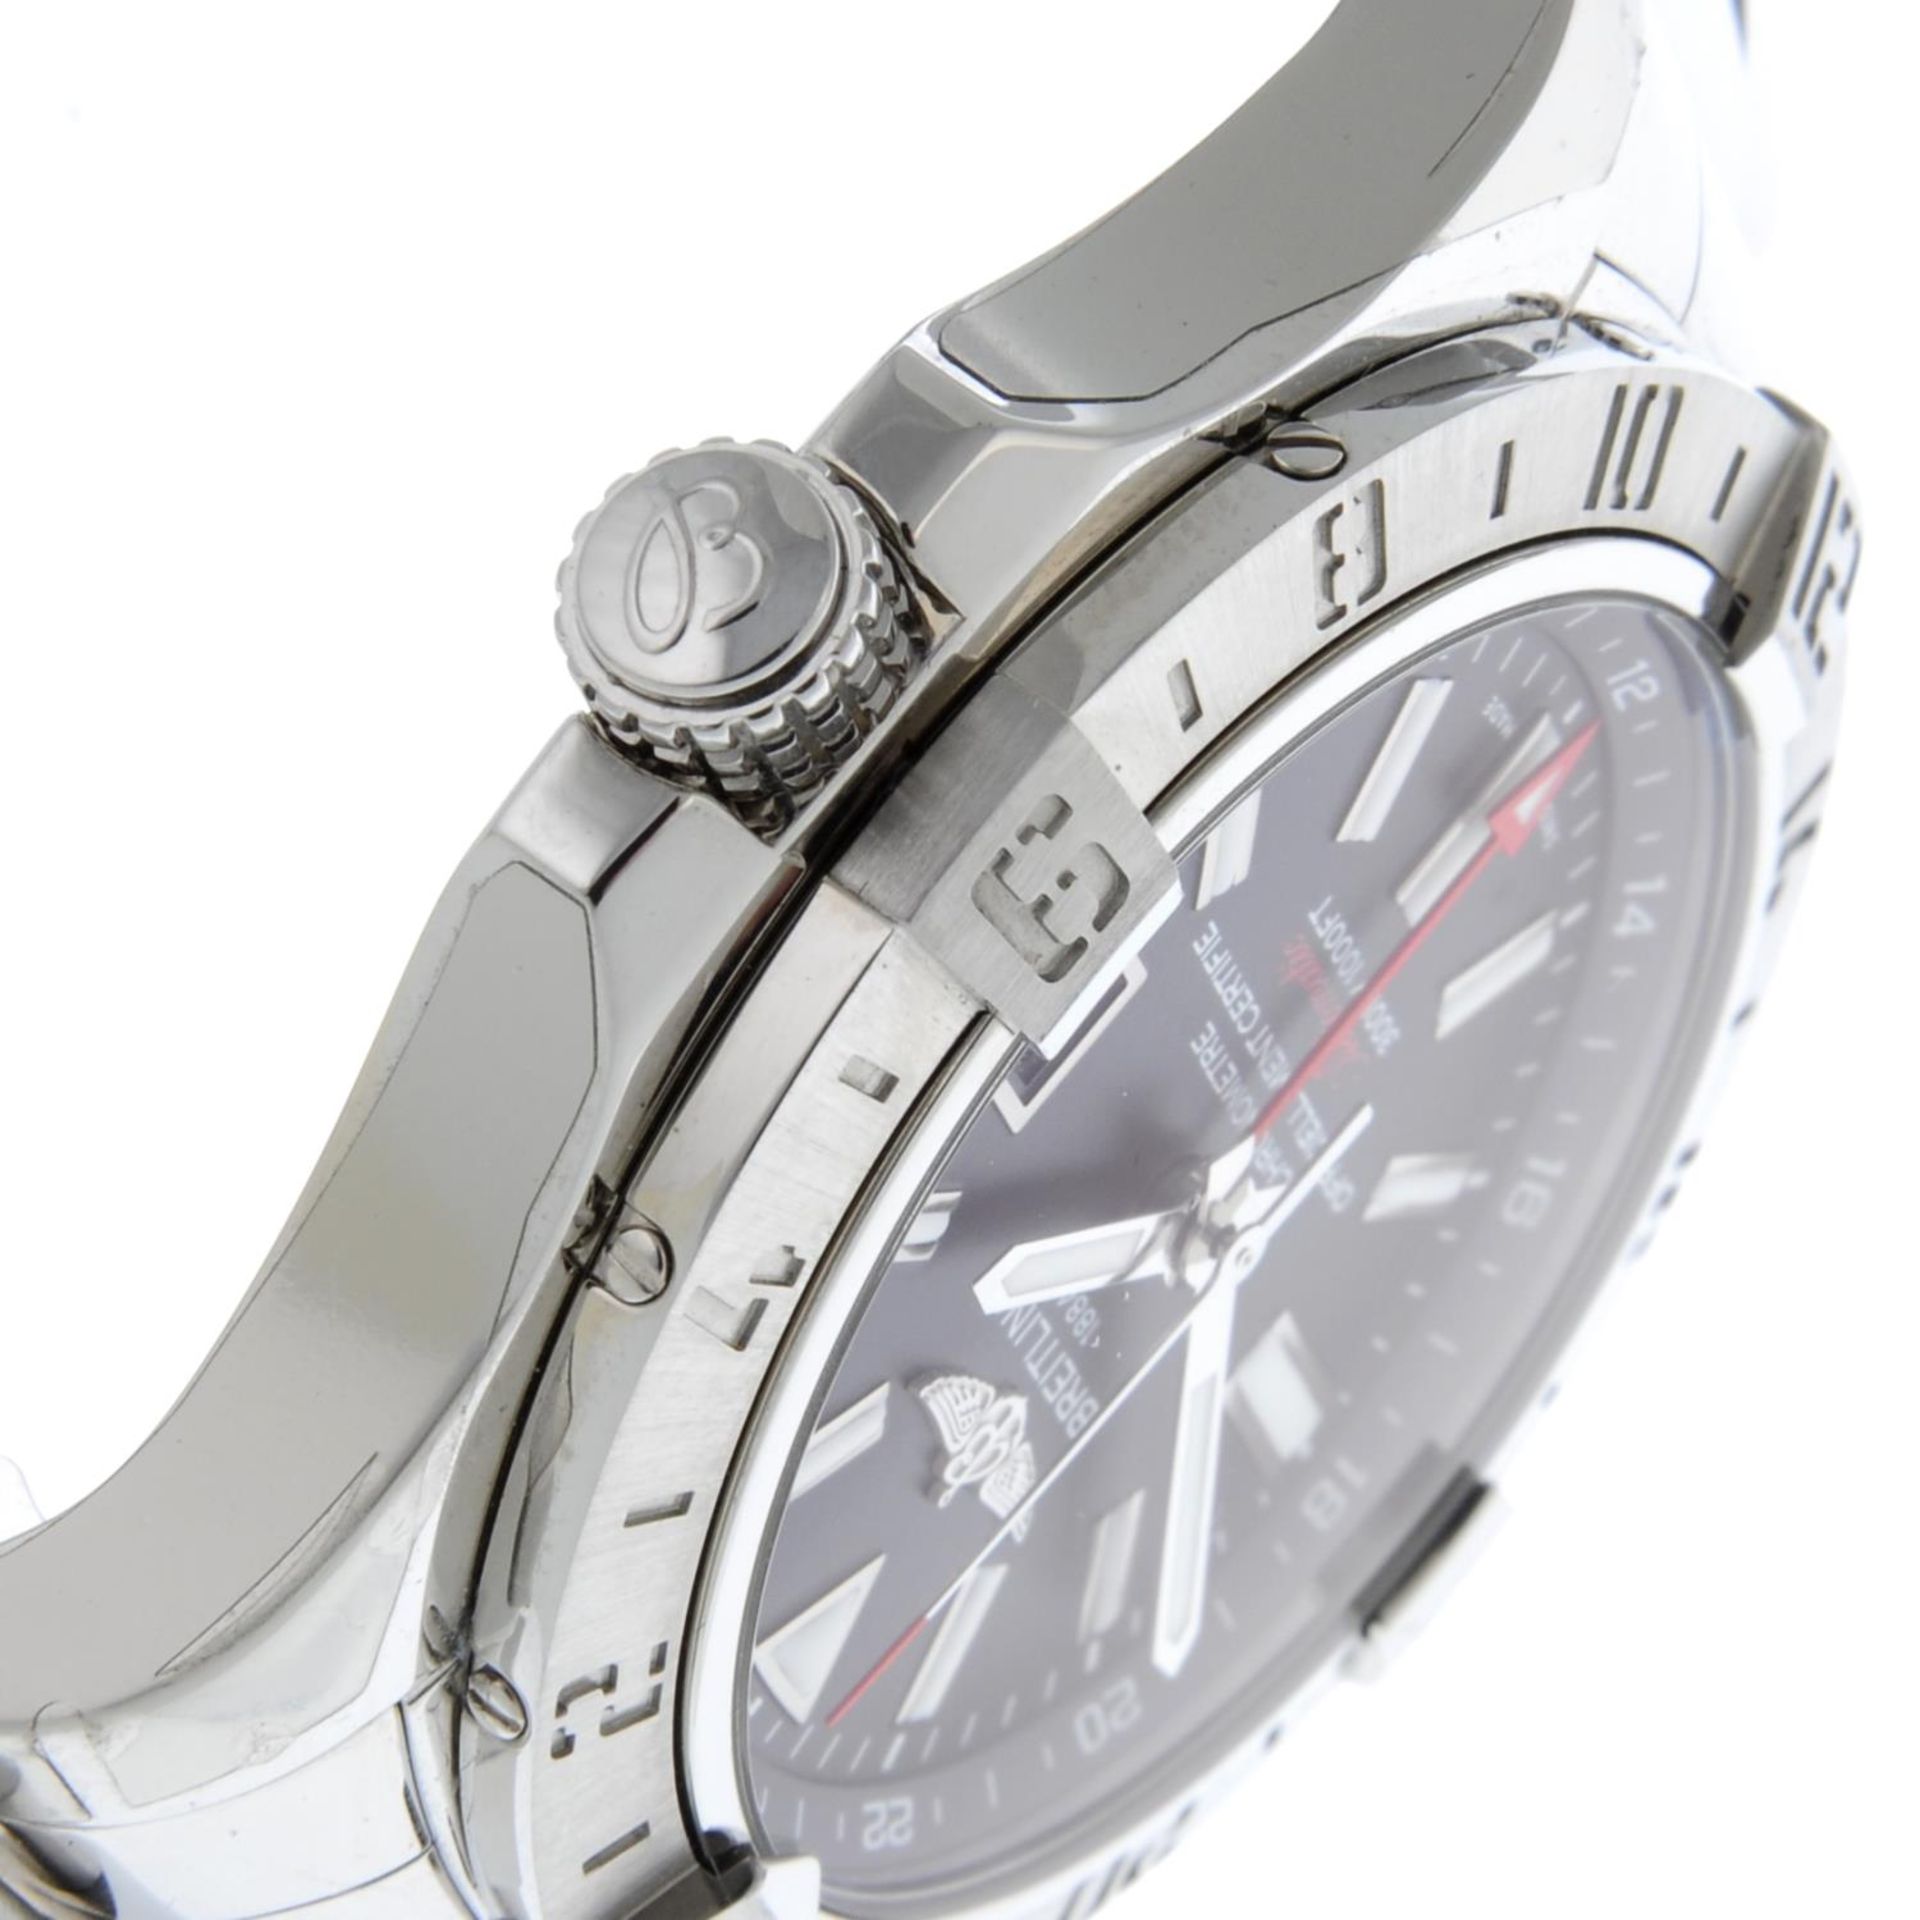 BREITLING - an Avenger II GMT braceletwatch. - Image 4 of 5